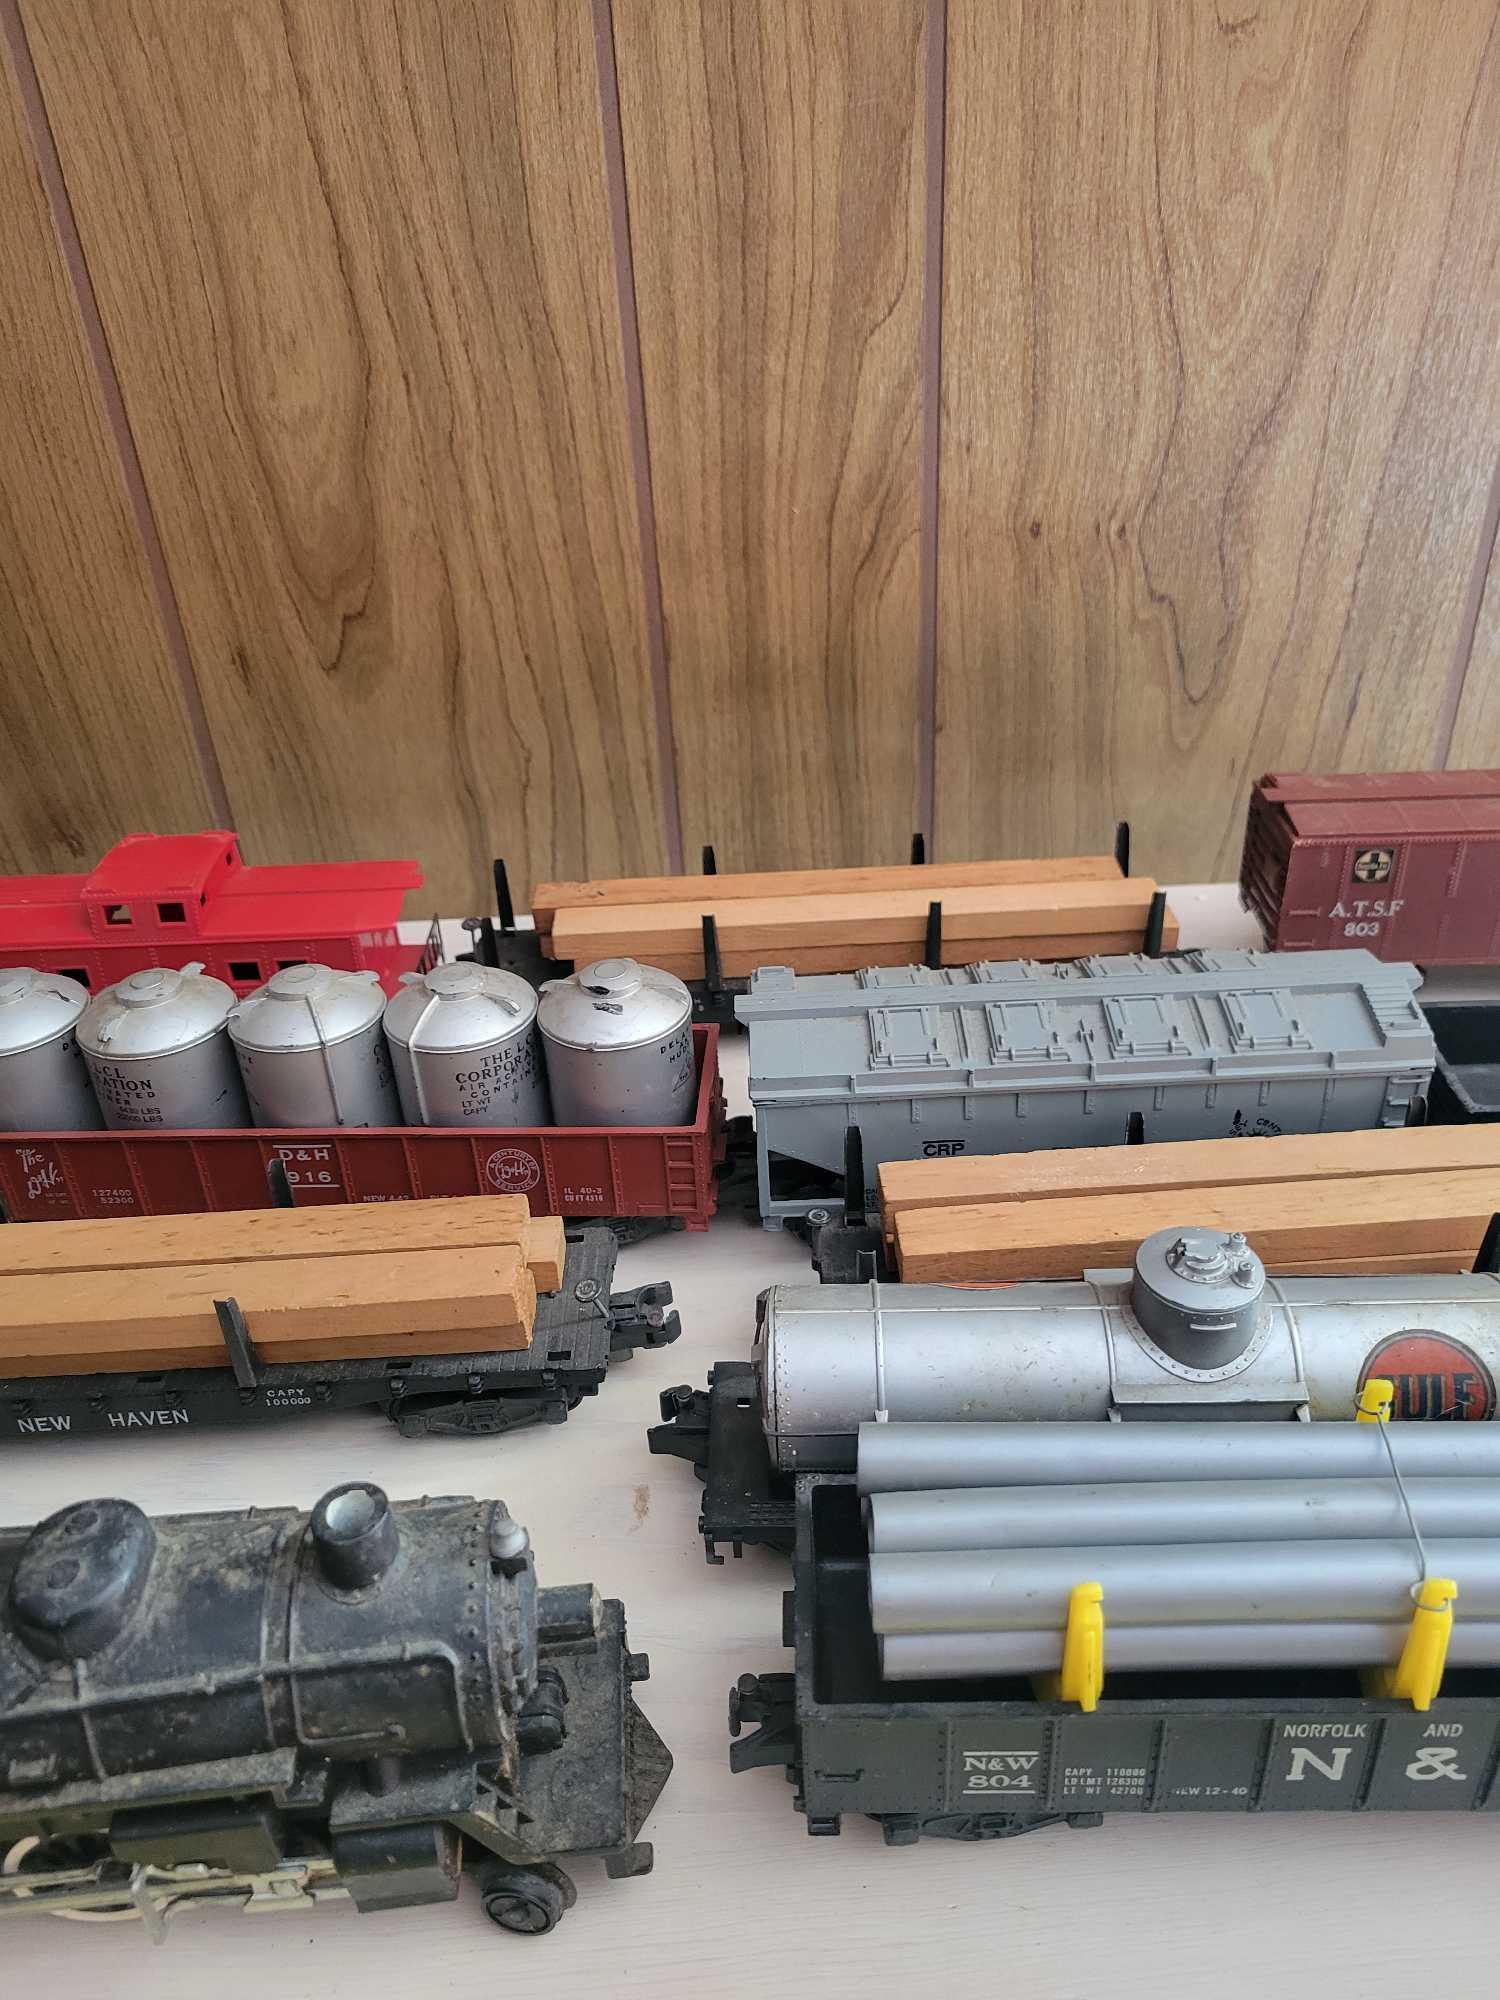 Vintage American Flyer Toy Train Set